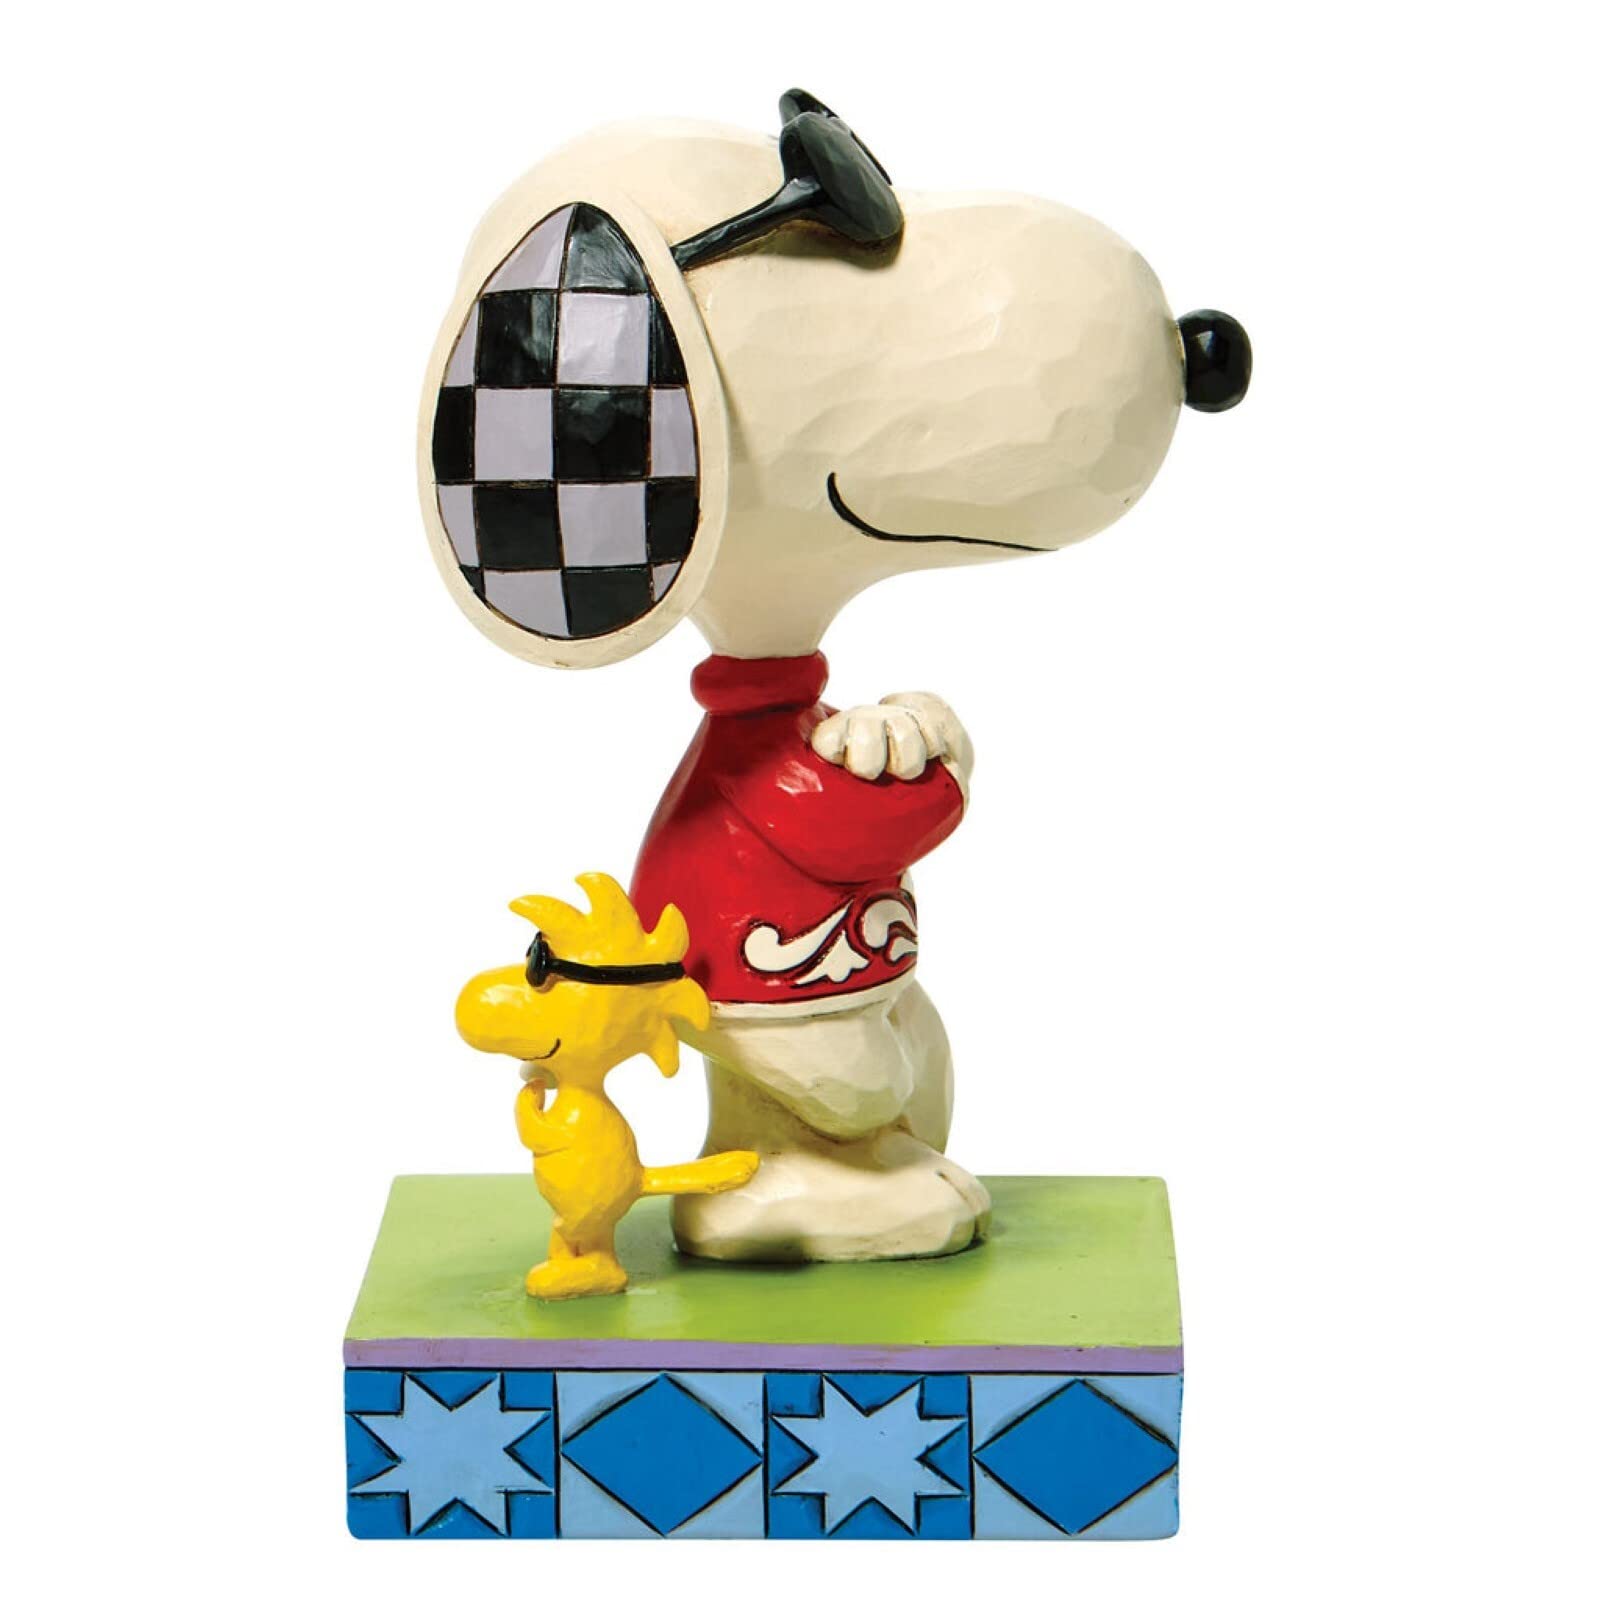 Enesco Jim Shore Peanuts Joe Cool Snoopy and Woodstock Back to Back Figurine, 5 Inch, Multicolor